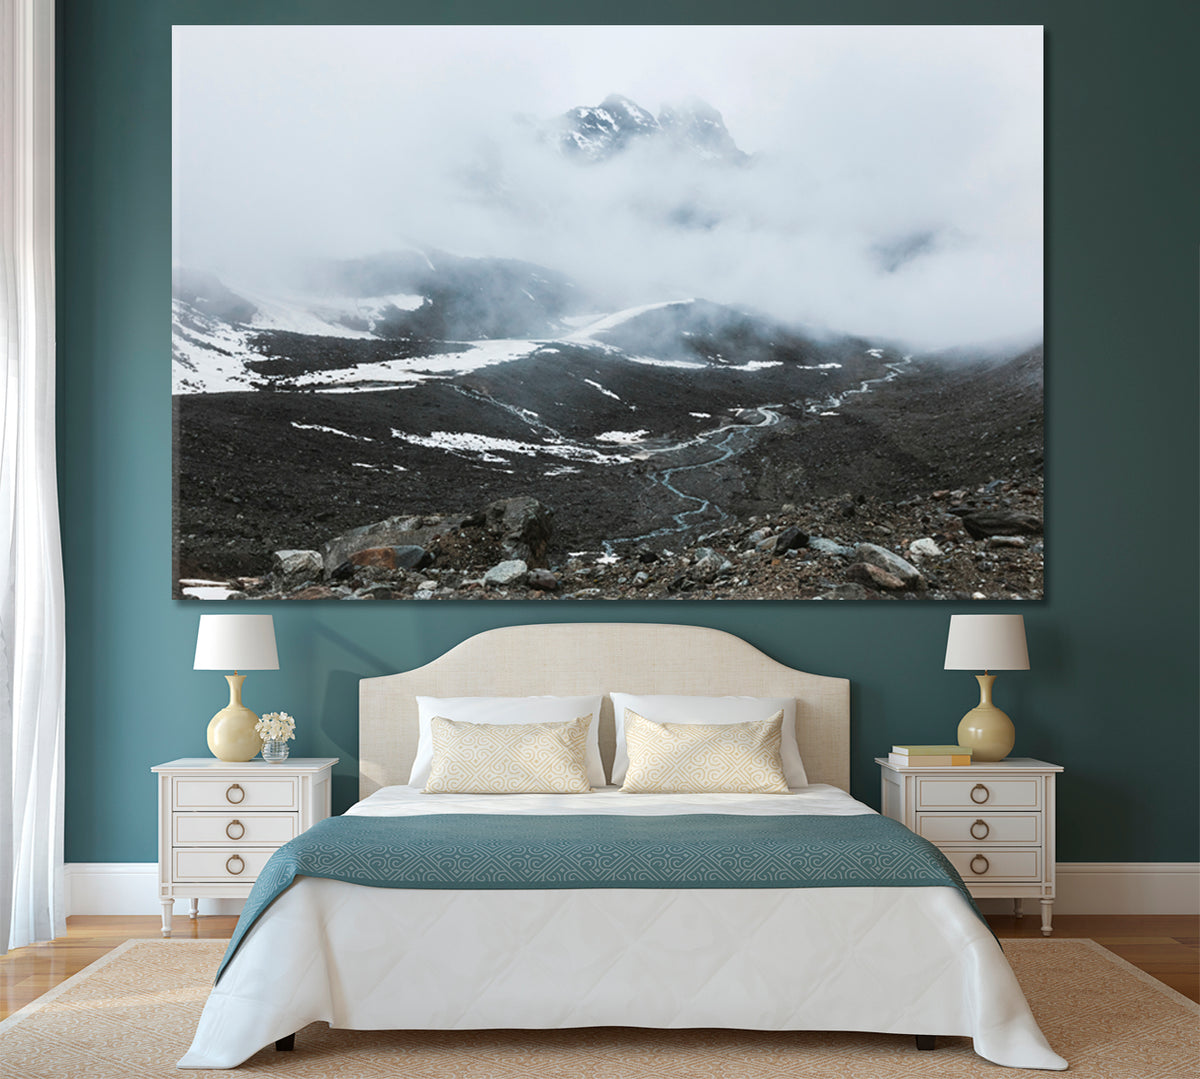 Mountain Landscape: Rocks Creeping Fog High Snowy Peaks Clouds Canvas Print Nature Wall Canvas Print Artesty 1 panel 24" x 16" 